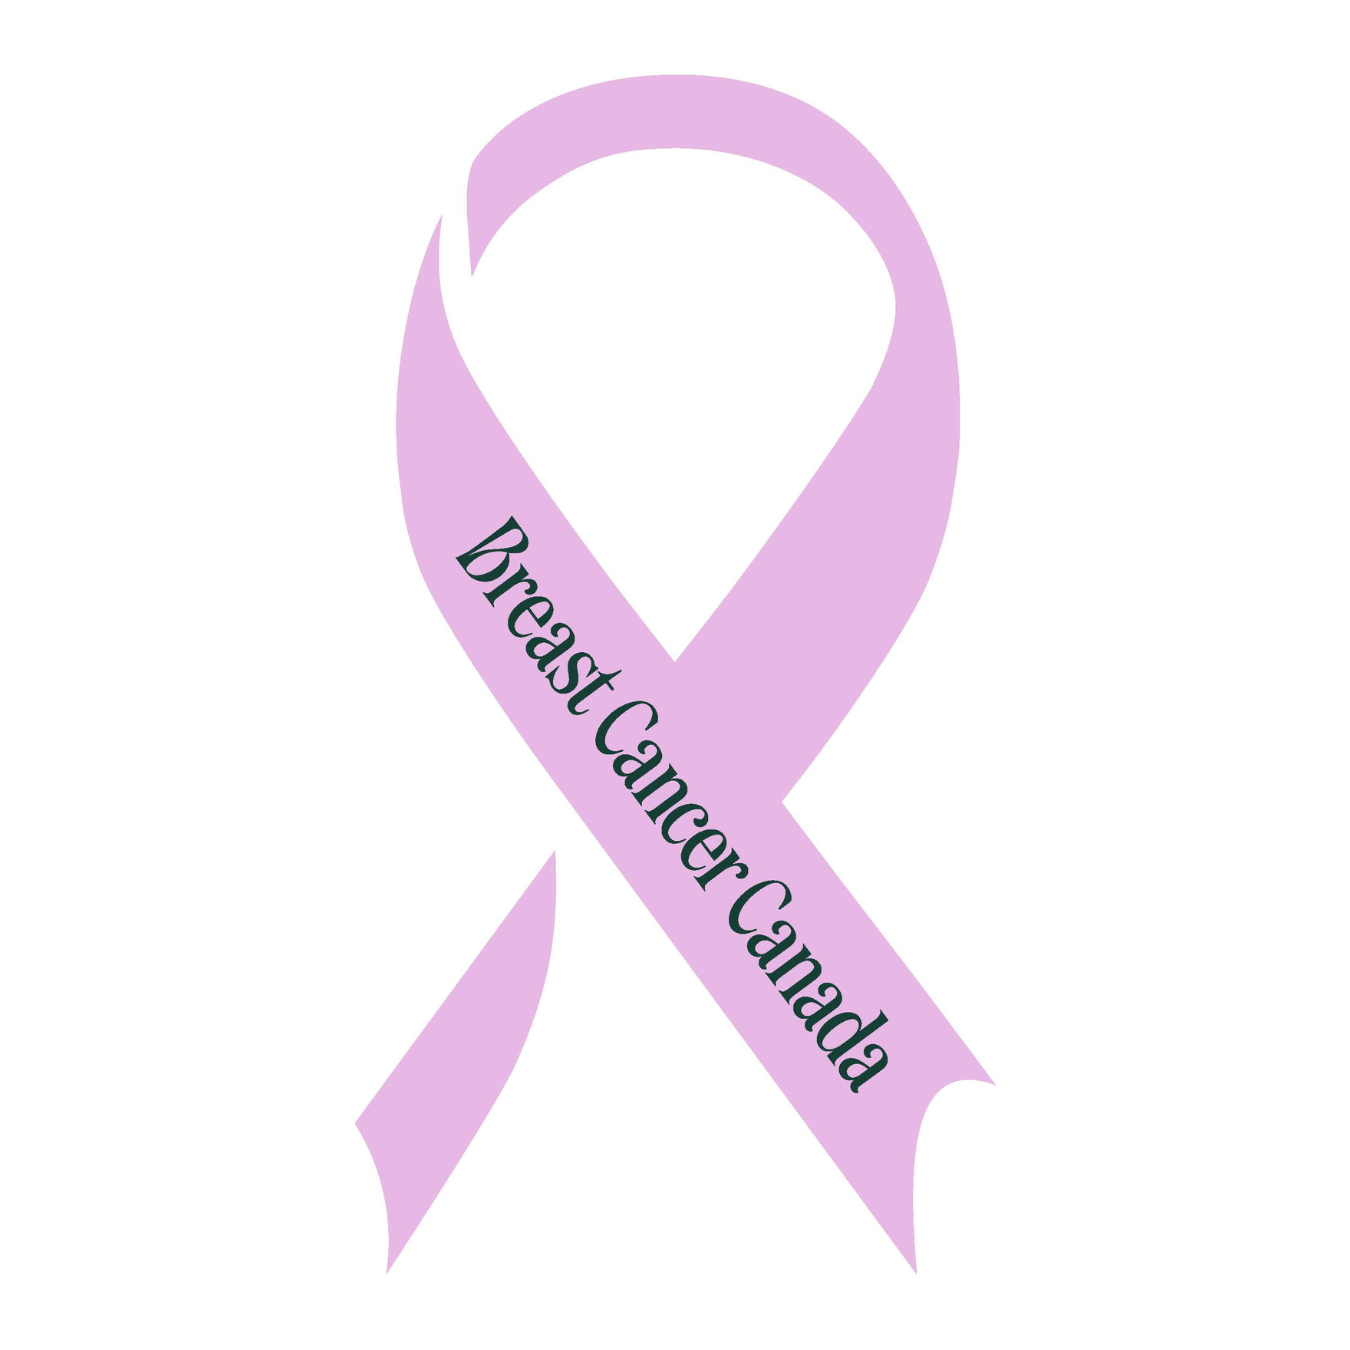 Breast Cancer Canada Donation $10